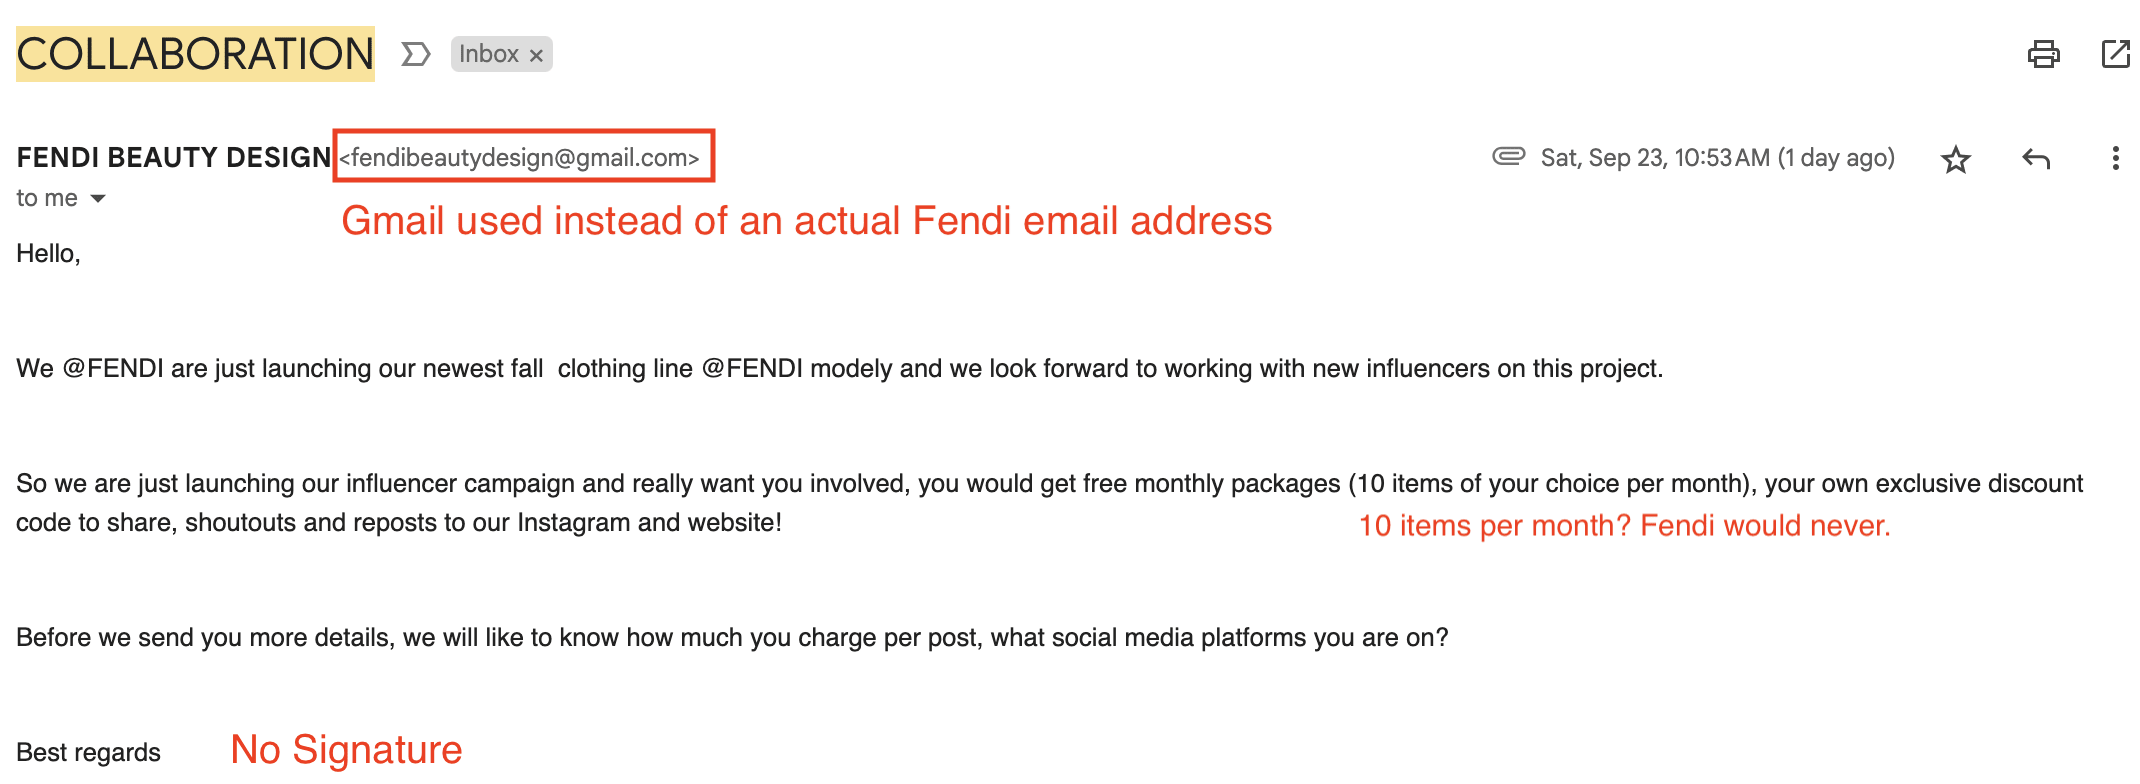 Fendi fake influencer collaboration email